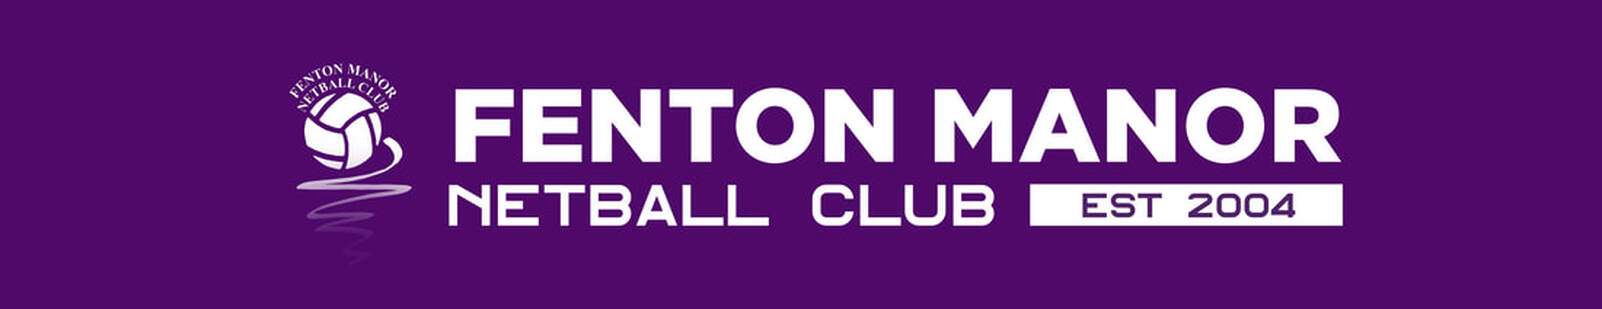 Fenton Manor Netball Club